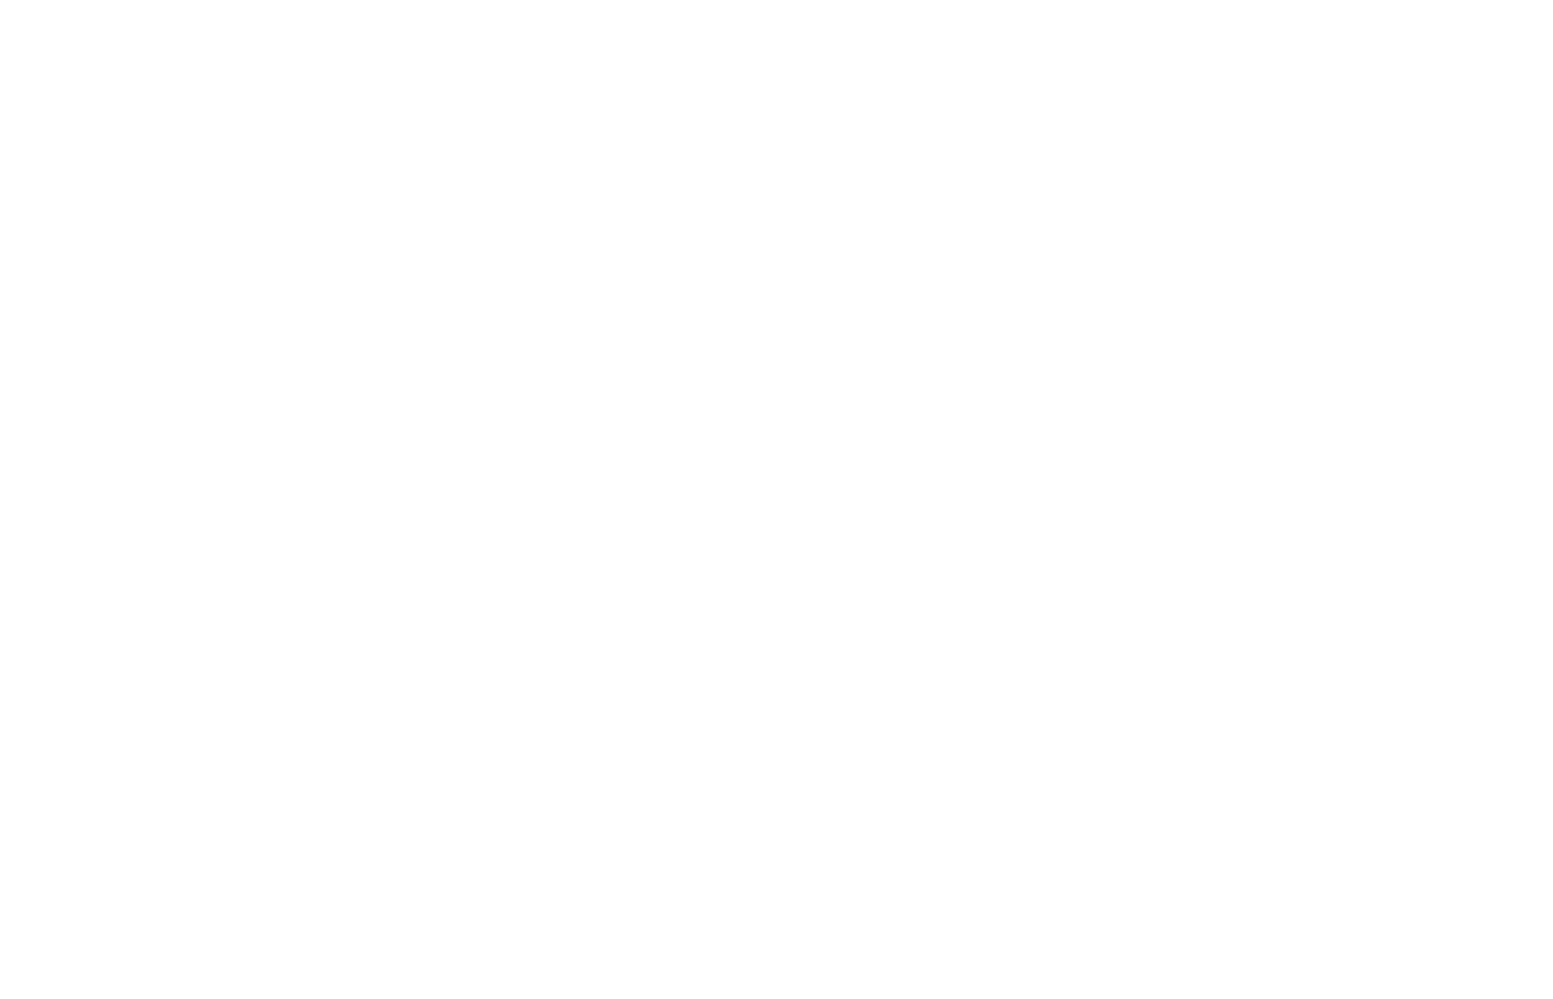 Immofinanz logo for dark backgrounds (transparent PNG)